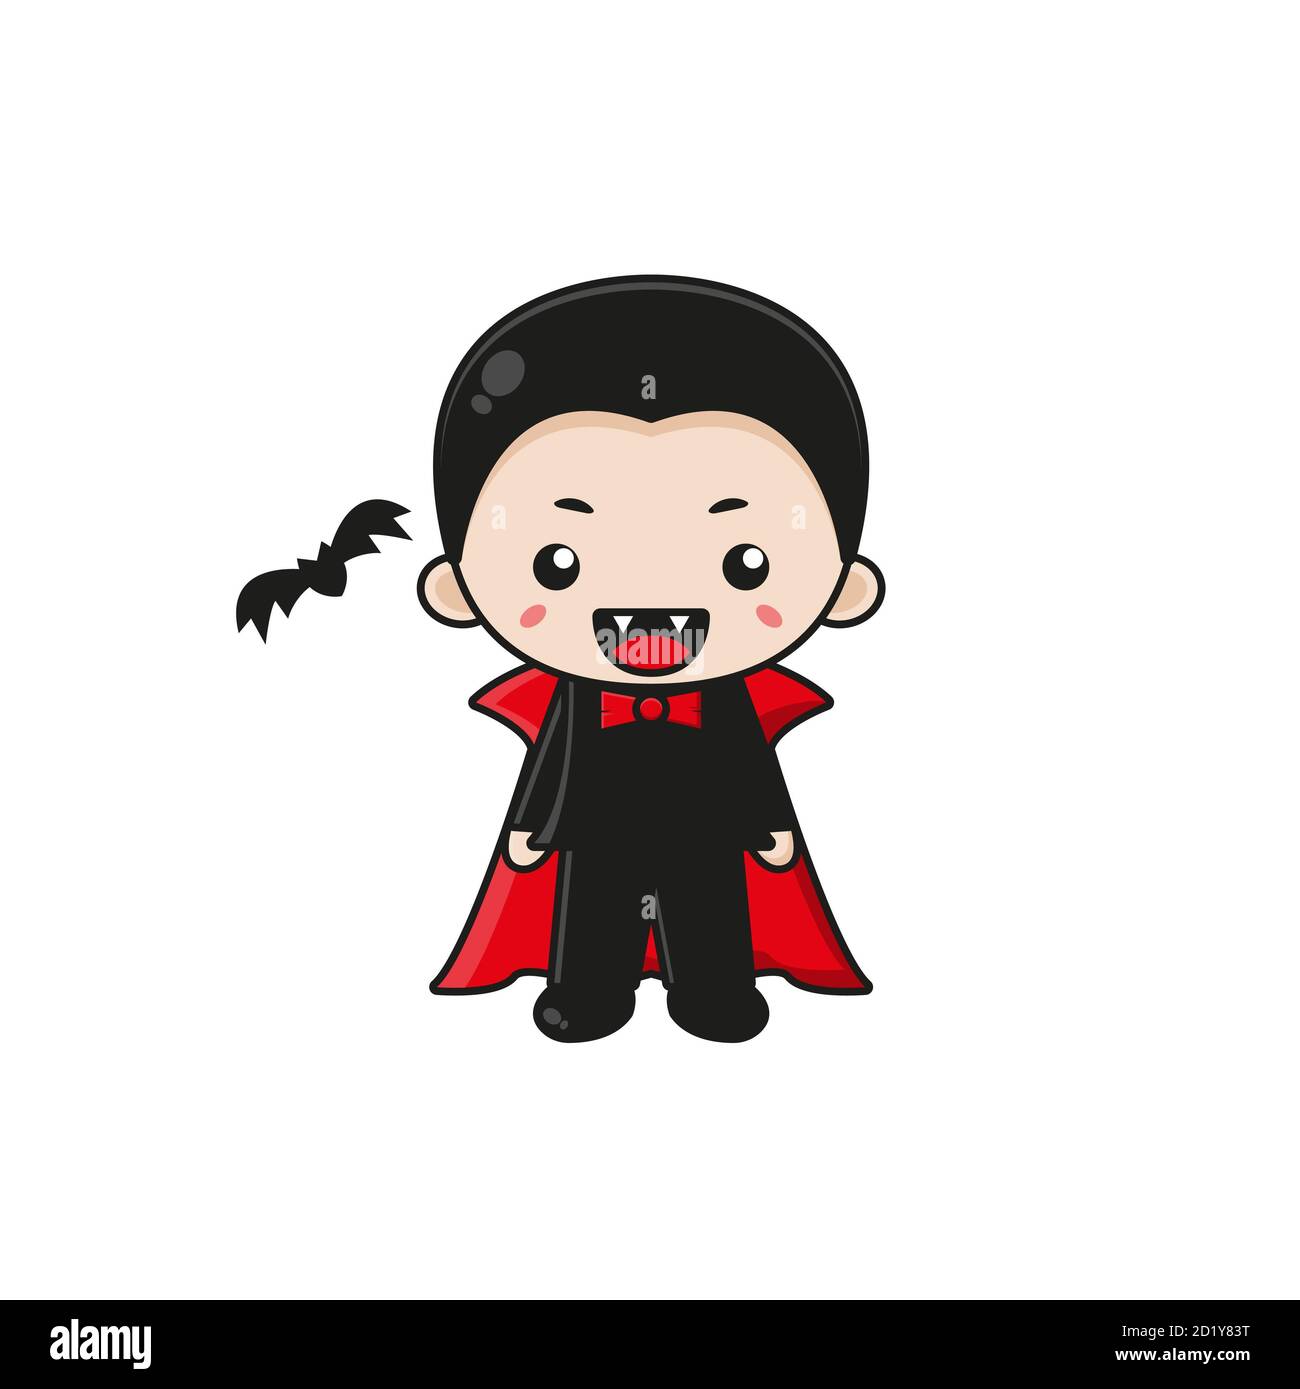 Cute vampire mascot character illustration. Design isolated on white  background Stock Photo - Alamy